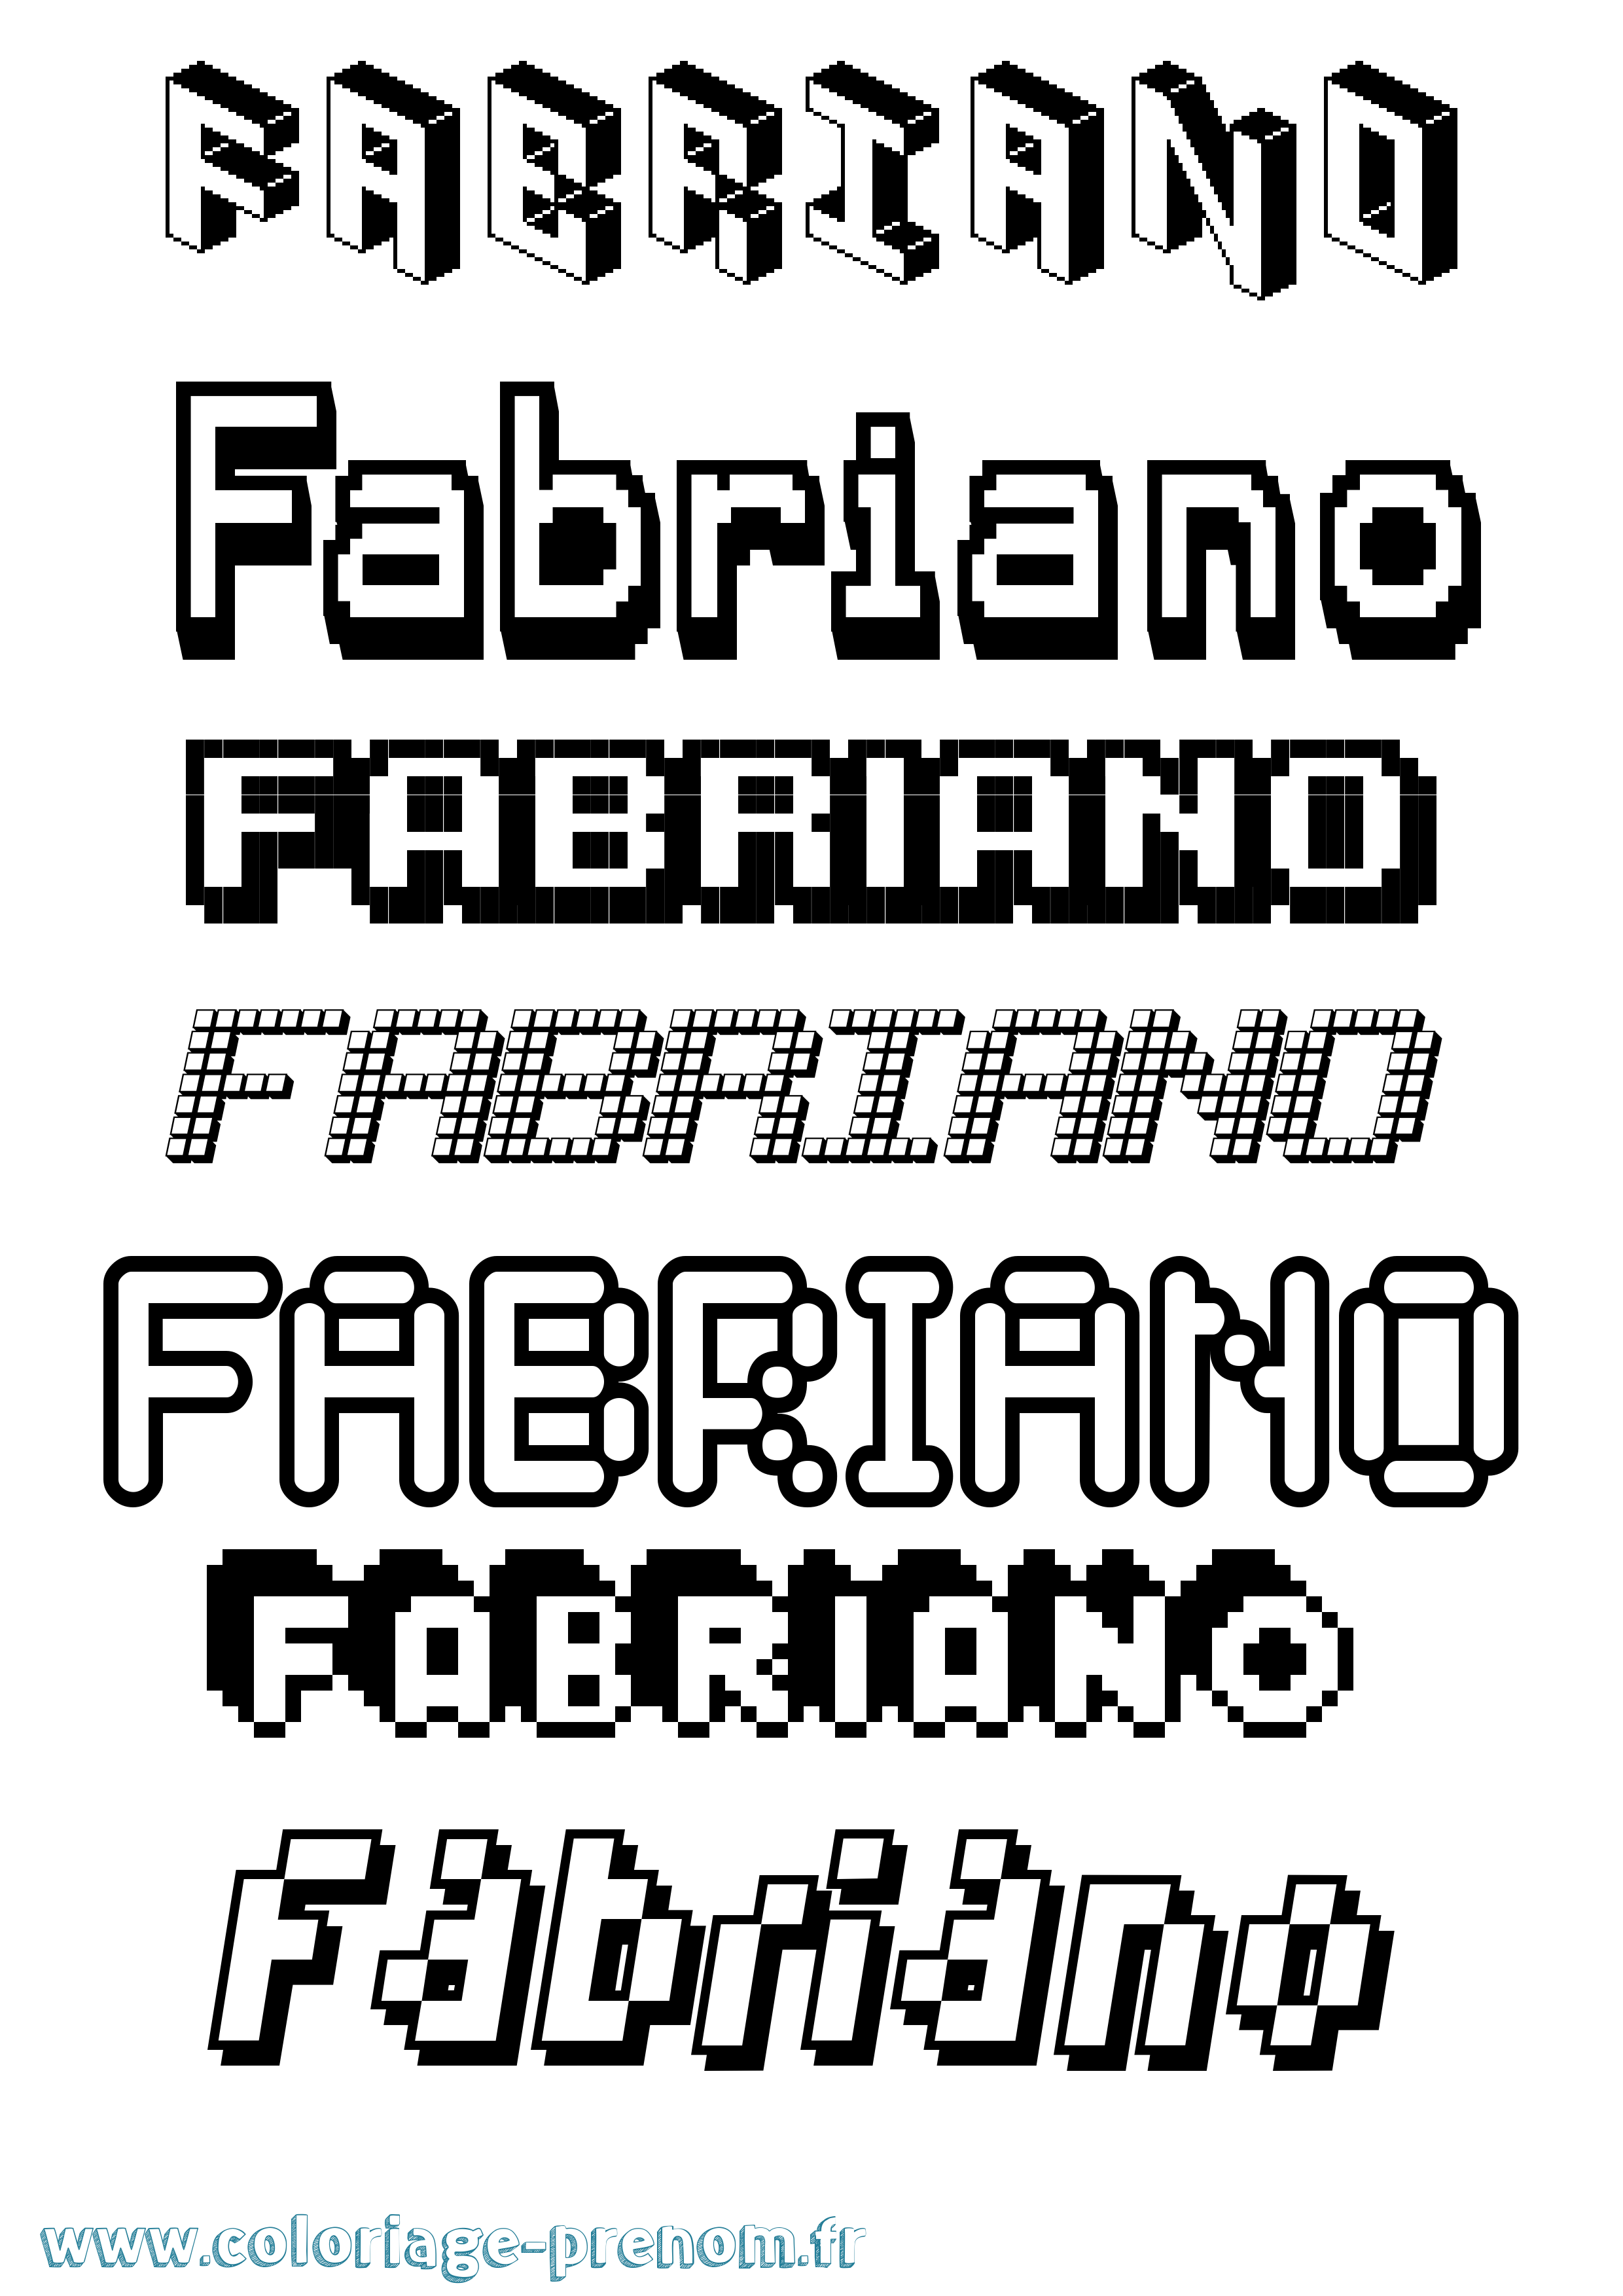 Coloriage prénom Fabriano Pixel